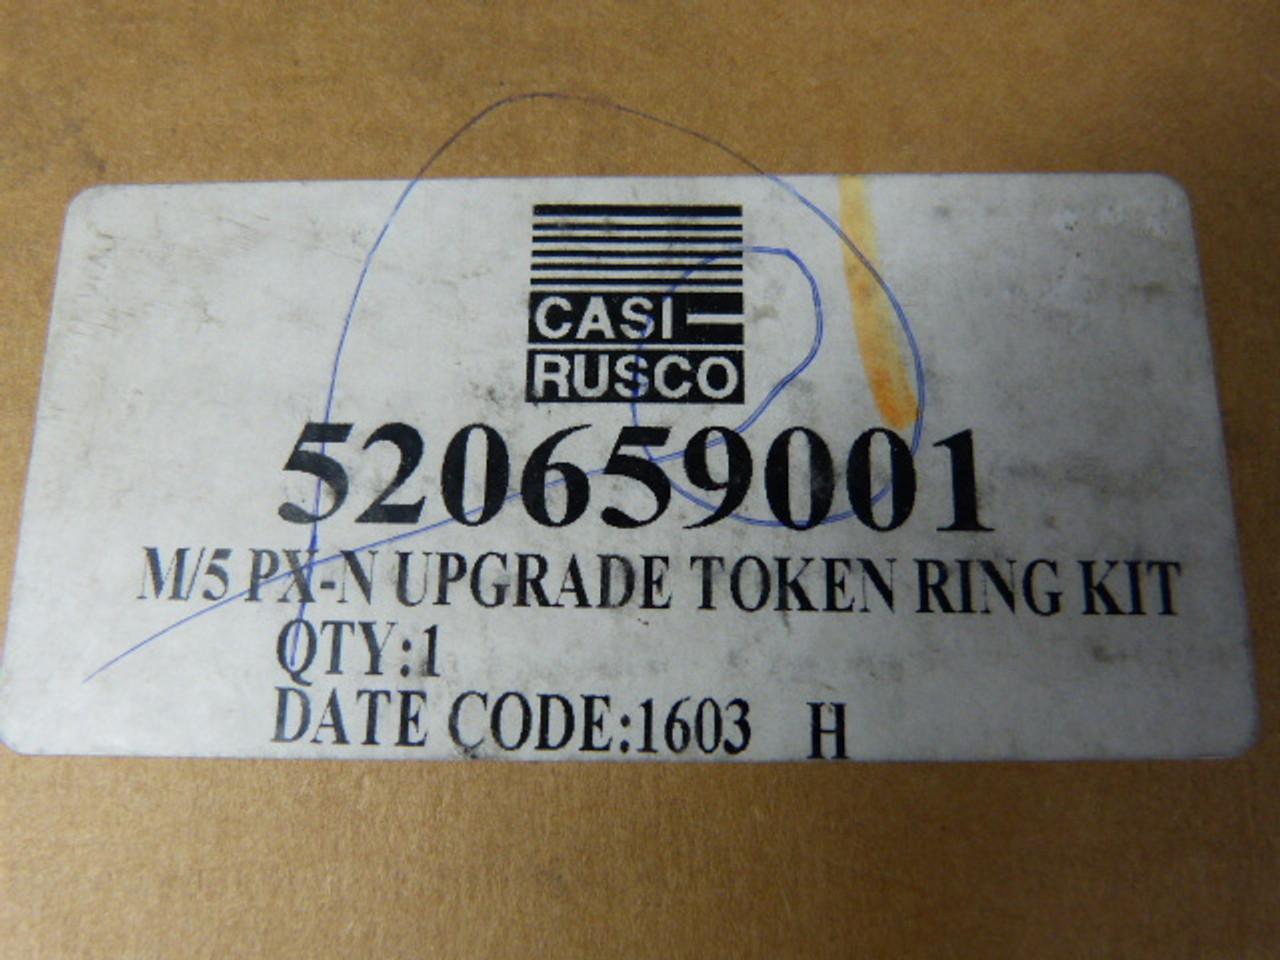 Casi Rusco 520659001 Upgrade Token Ring Kit ! NEW !